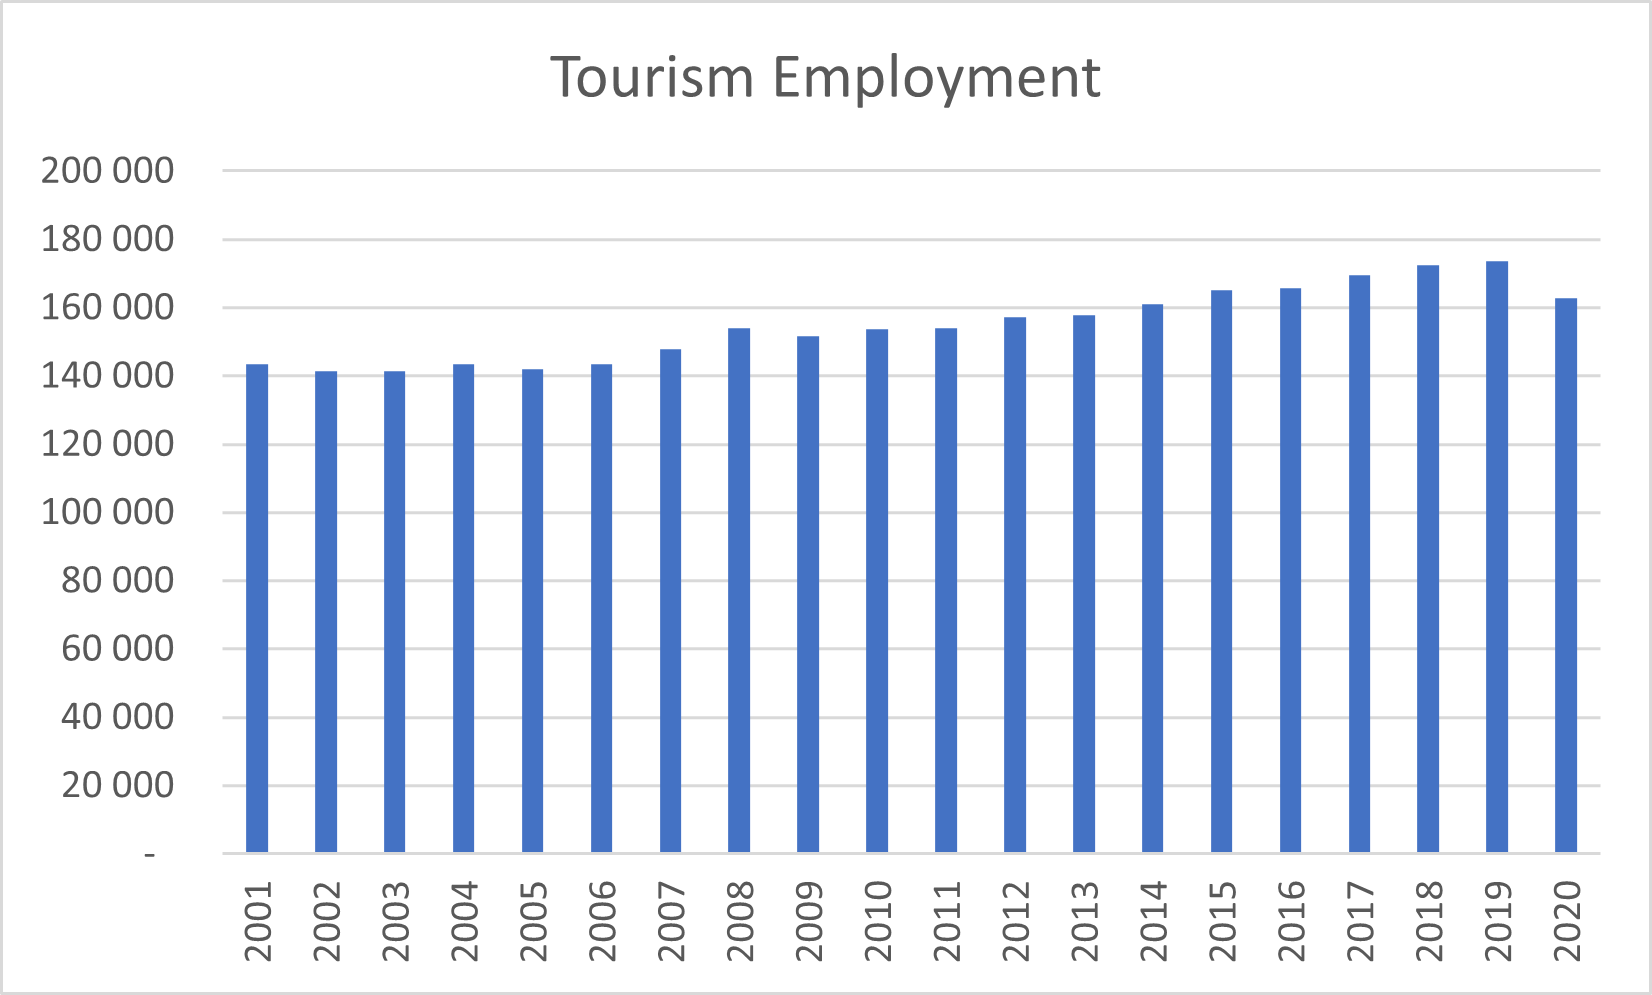 Table 2 - Tourism Employment